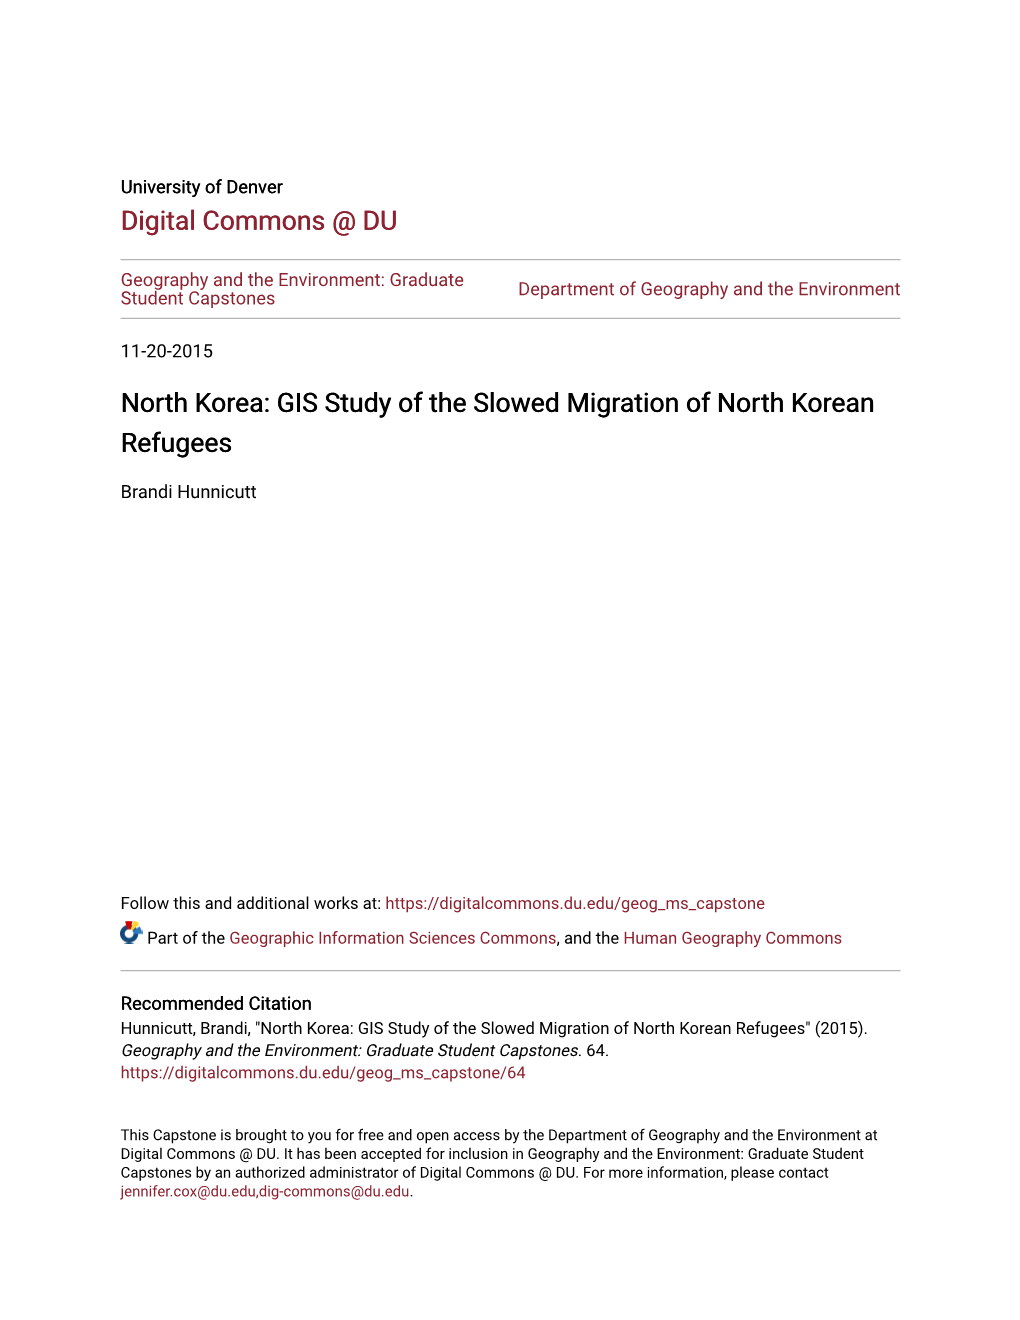 North Korea: GIS Study of the Slowed Migration of North Korean Refugees